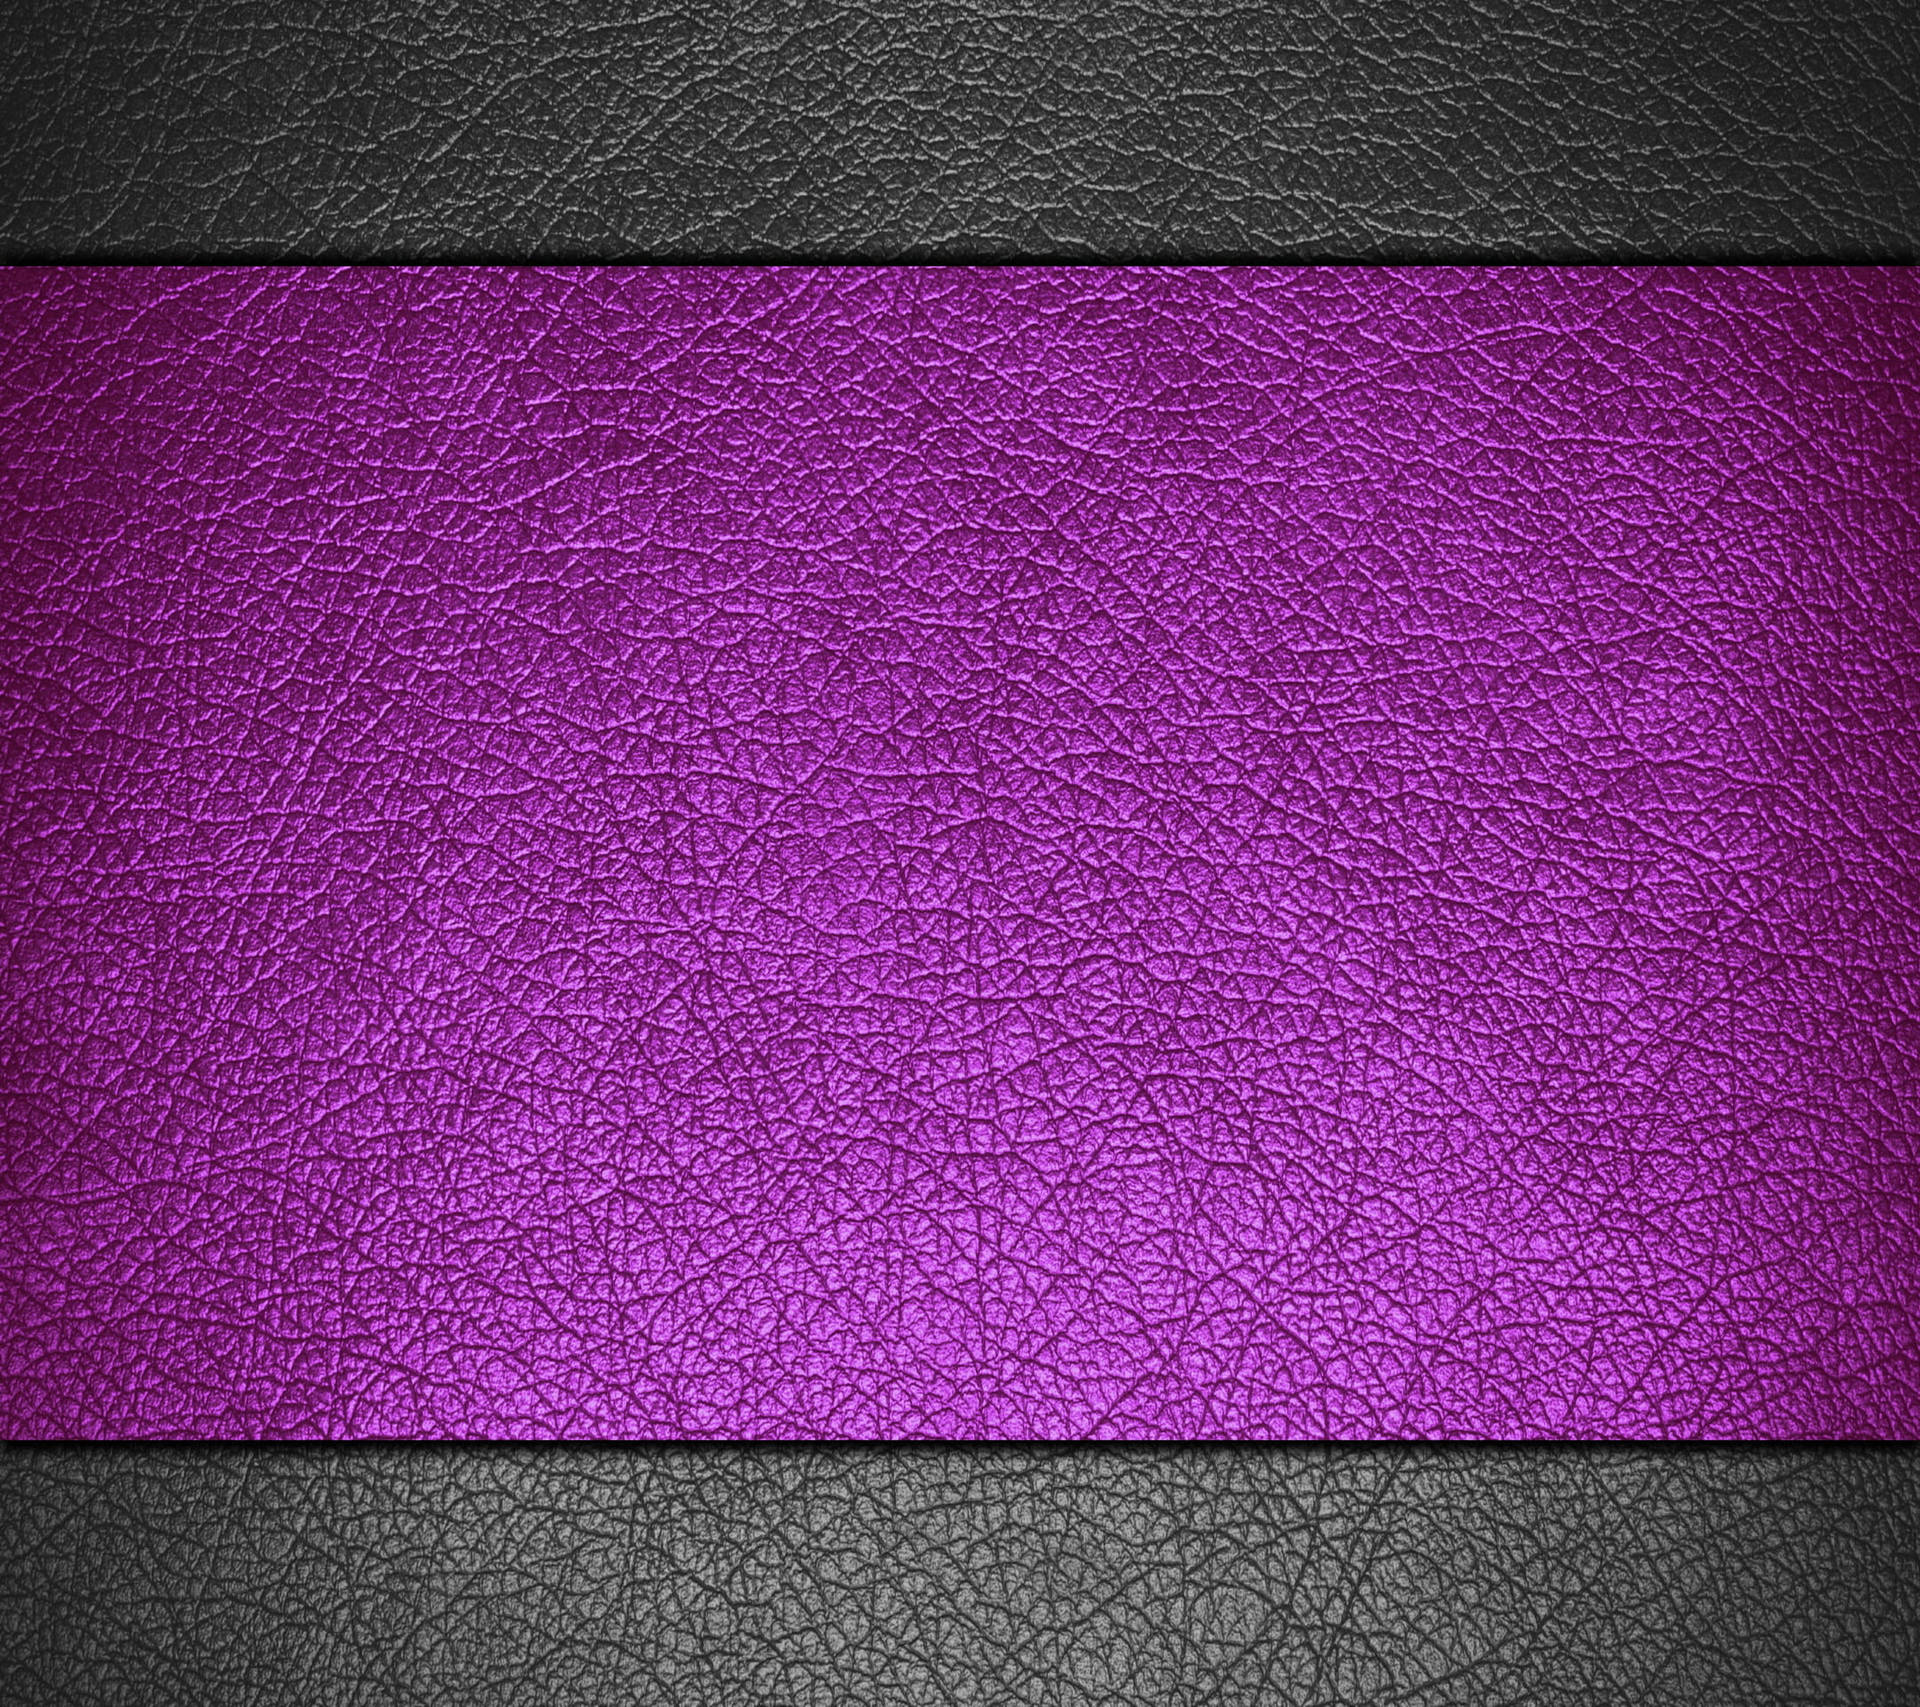 Black And Purple Aesthetic Leather Desktop Wallpaper